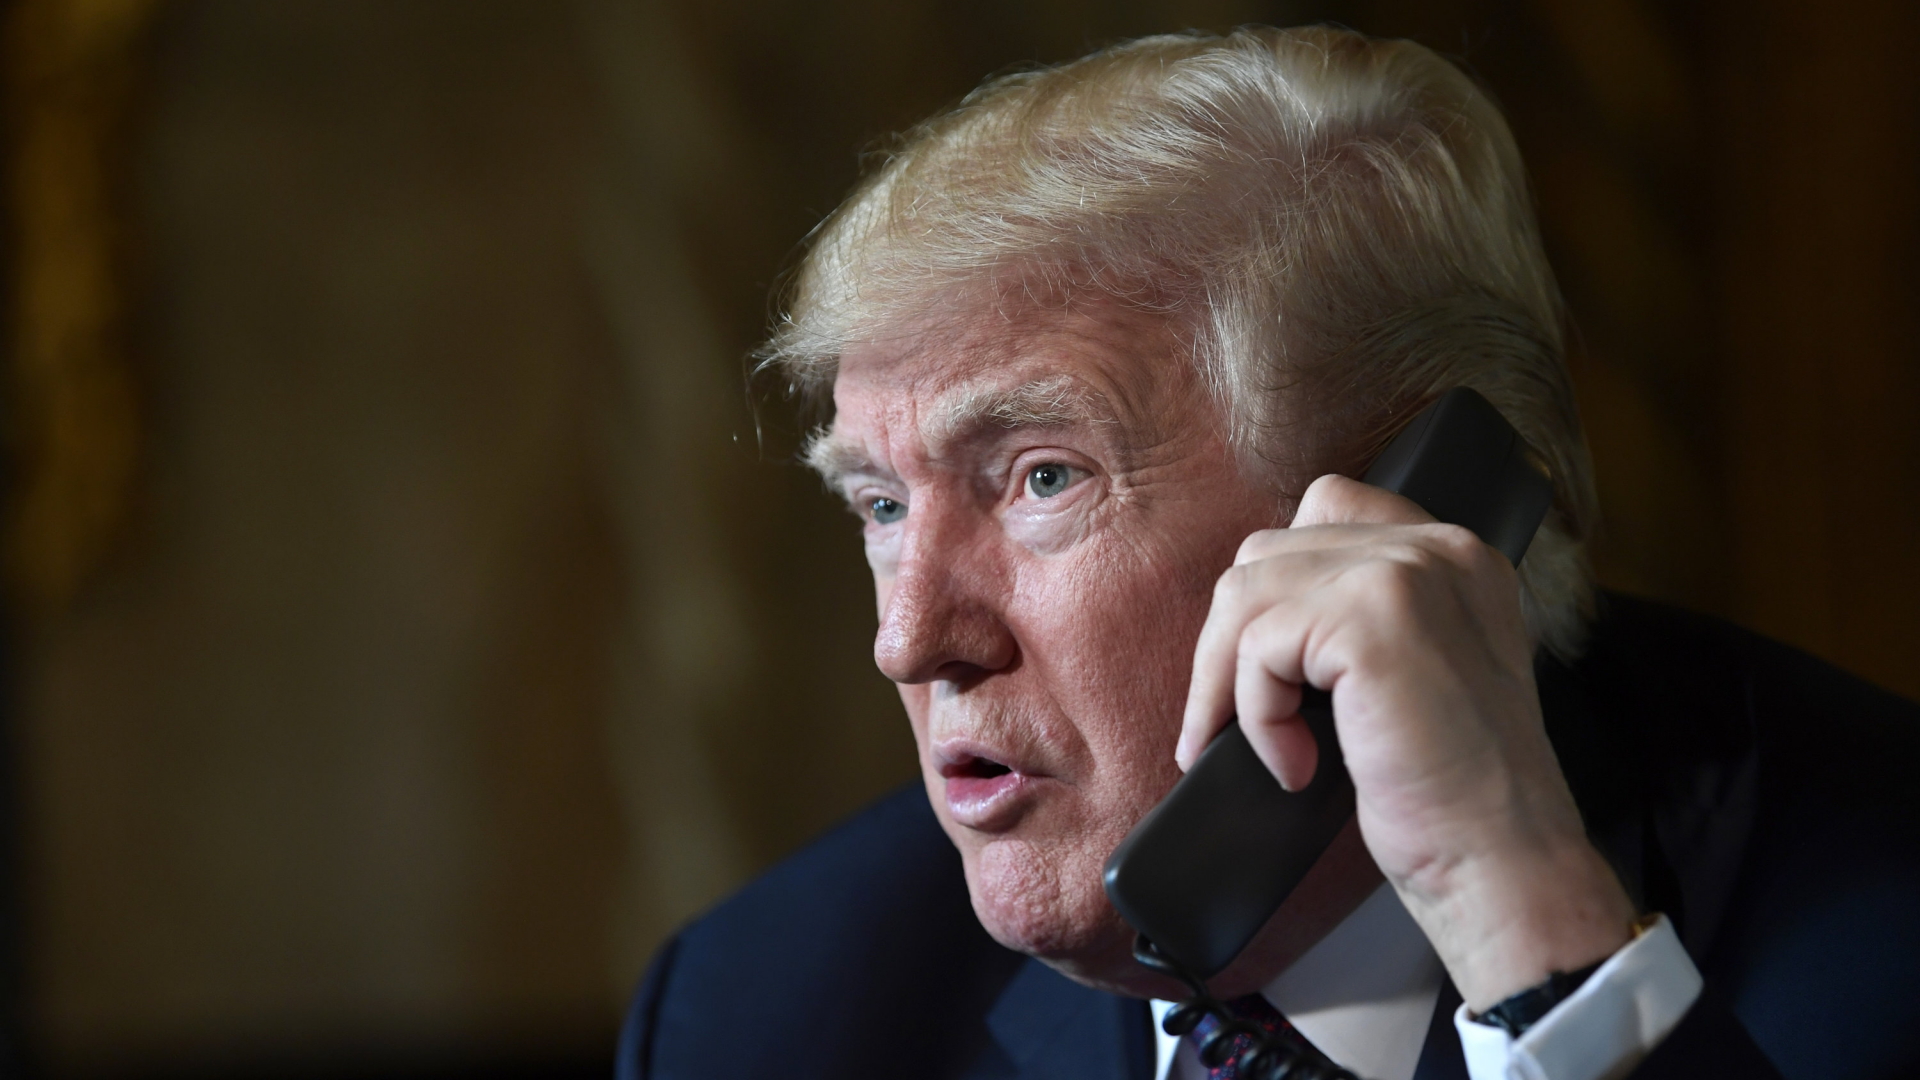 US-Präsident Trump am Telefon (Archivbild). | Bildquelle: dpa